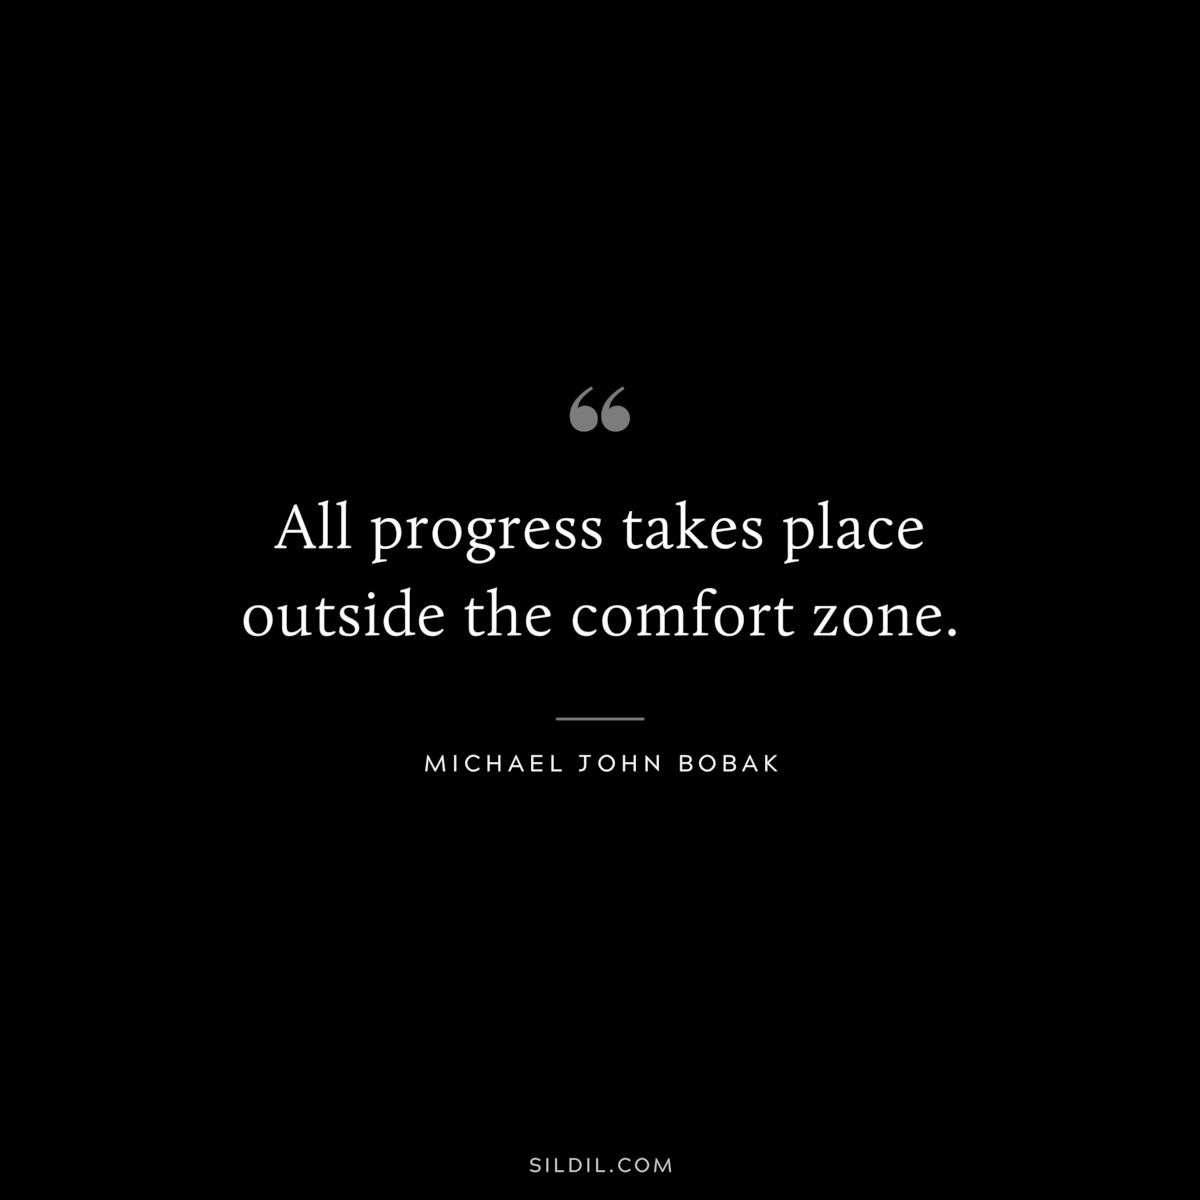 All progress takes place outside the comfort zone. ― Michael John Bobak